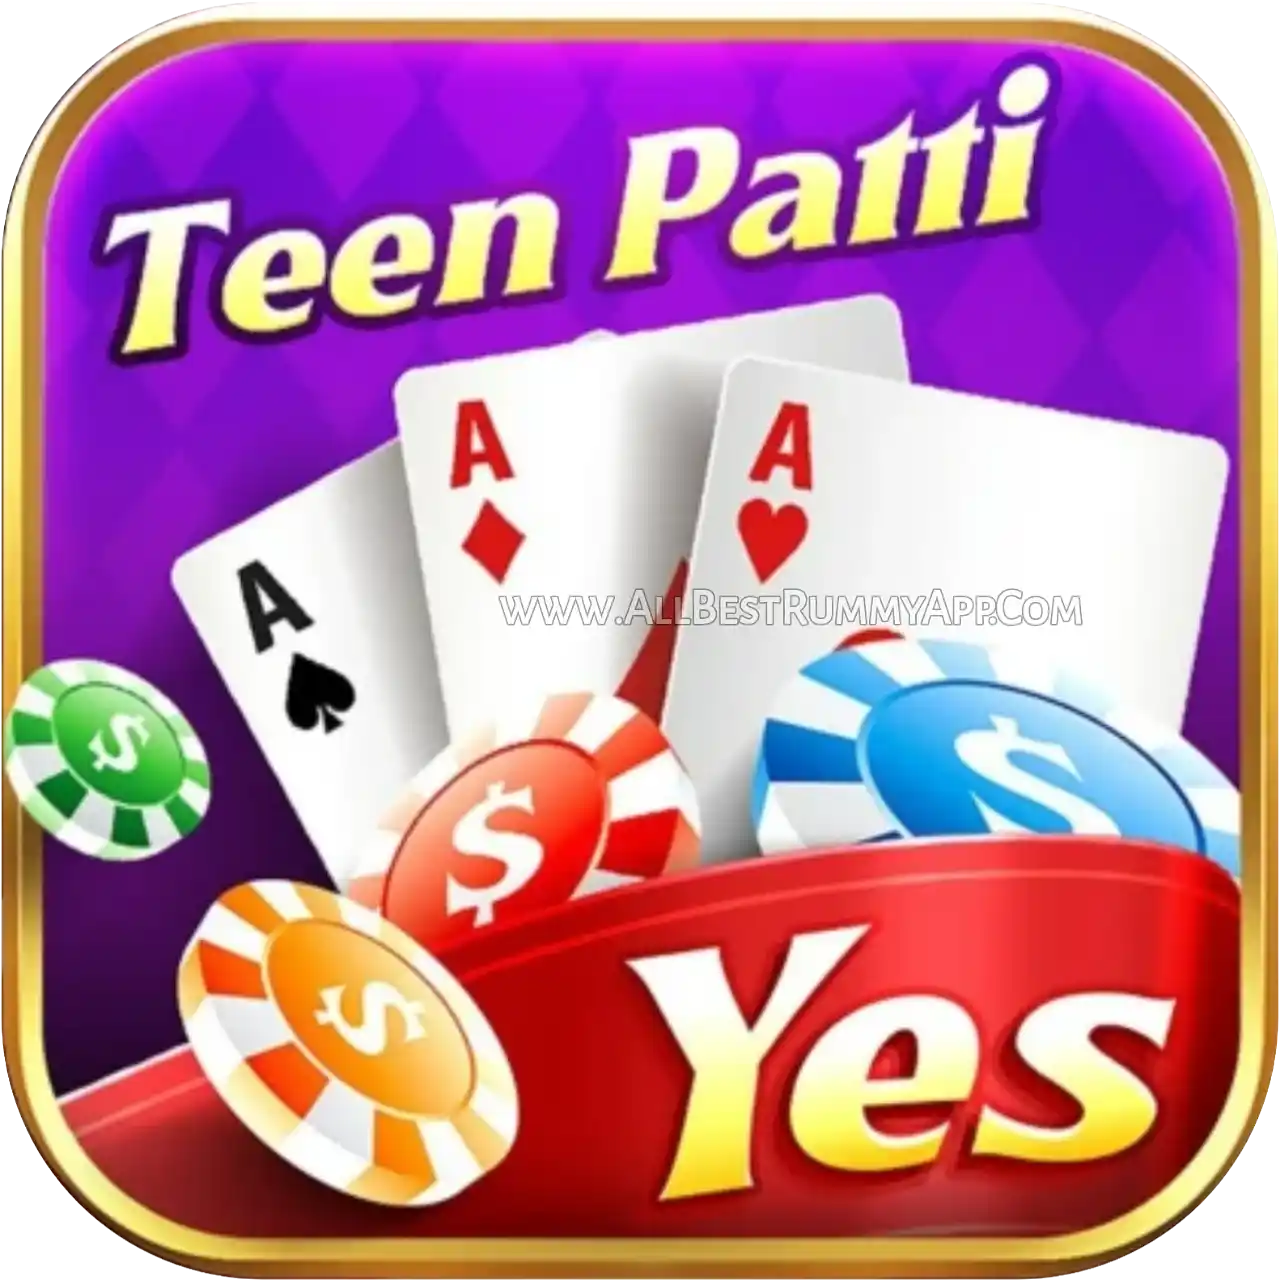 Teen Patti Yes APK - All Best Rummy App